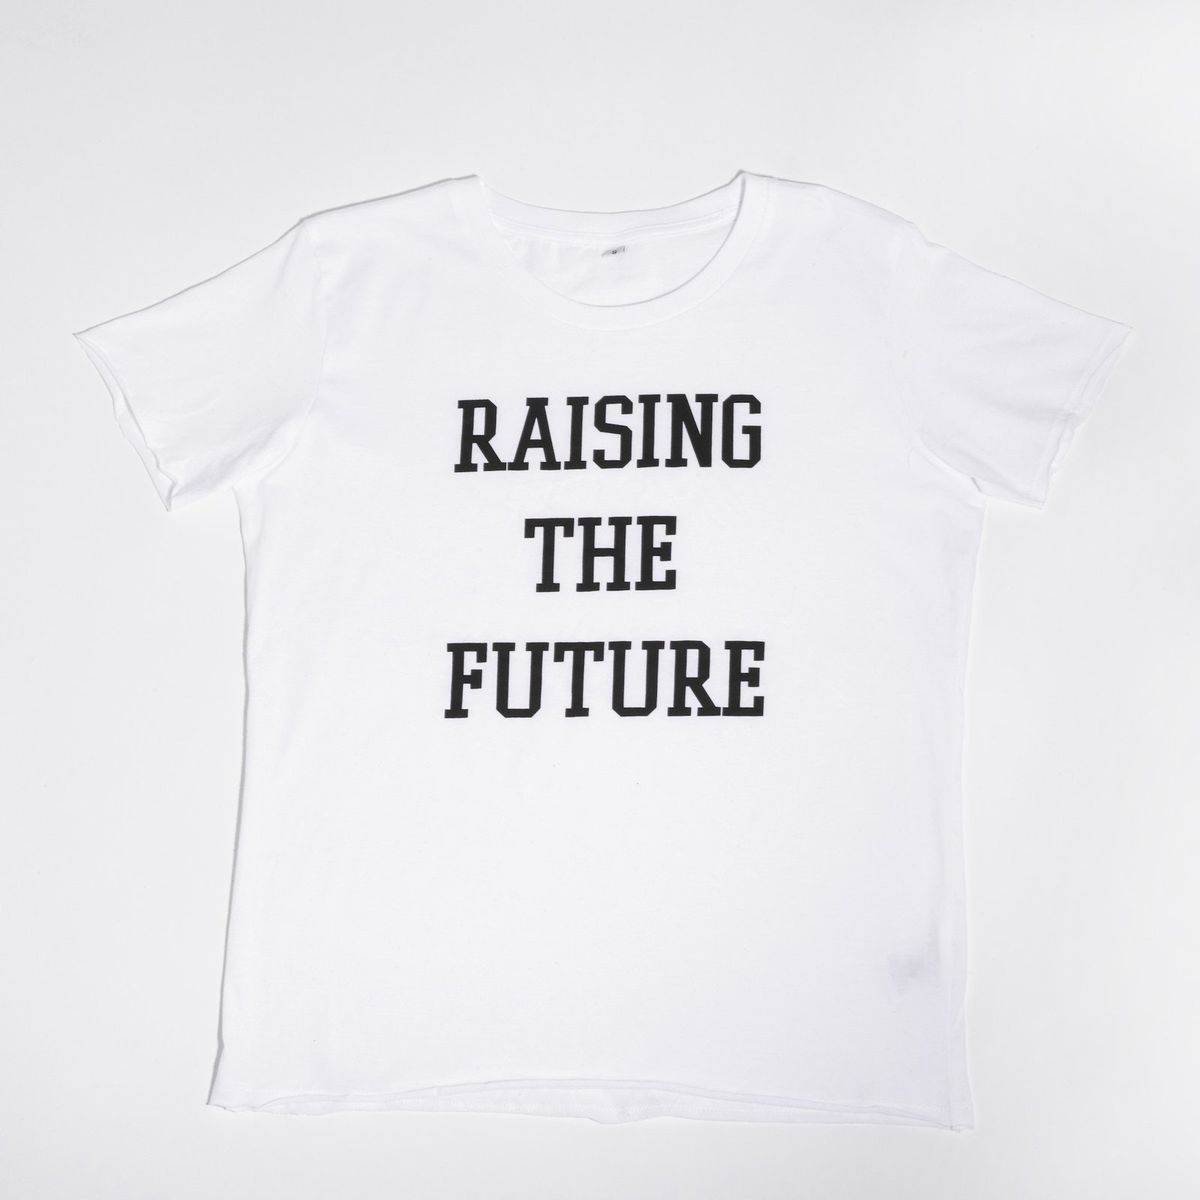 Du kannst Meghans „Raising The Future“-T-Shirt immer noch kaufen